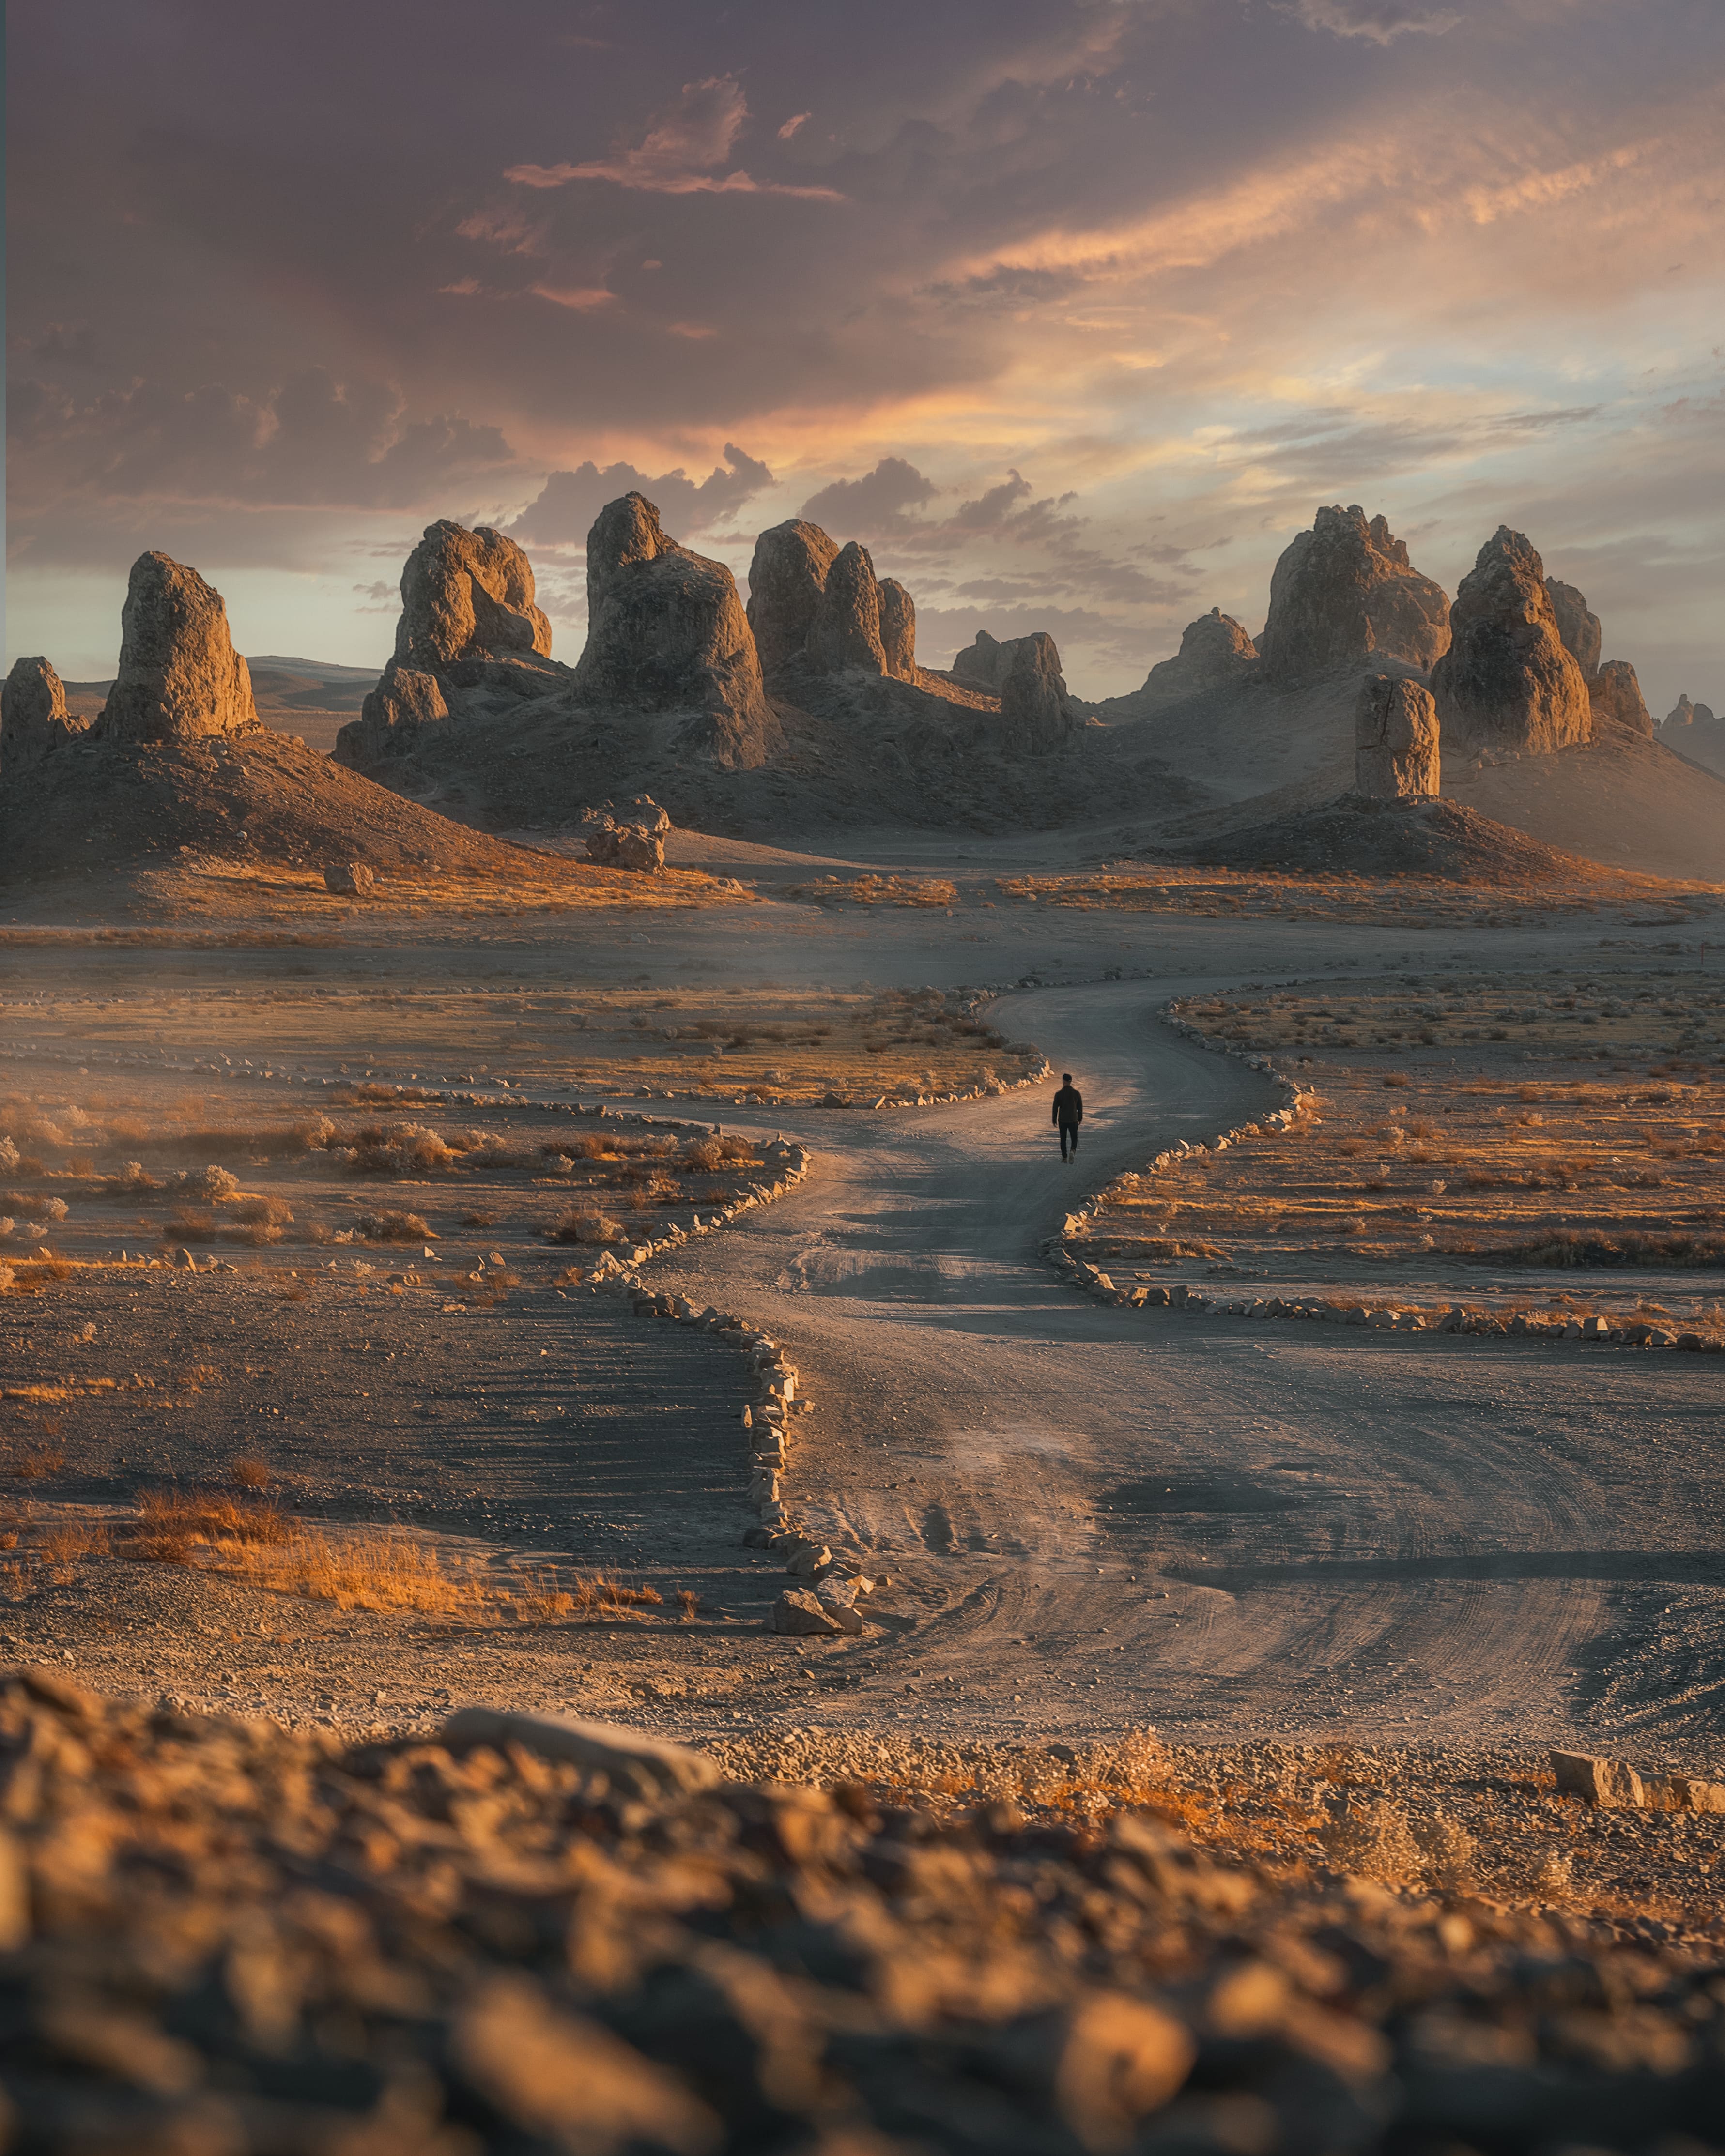 Man walking during sunset in the desert